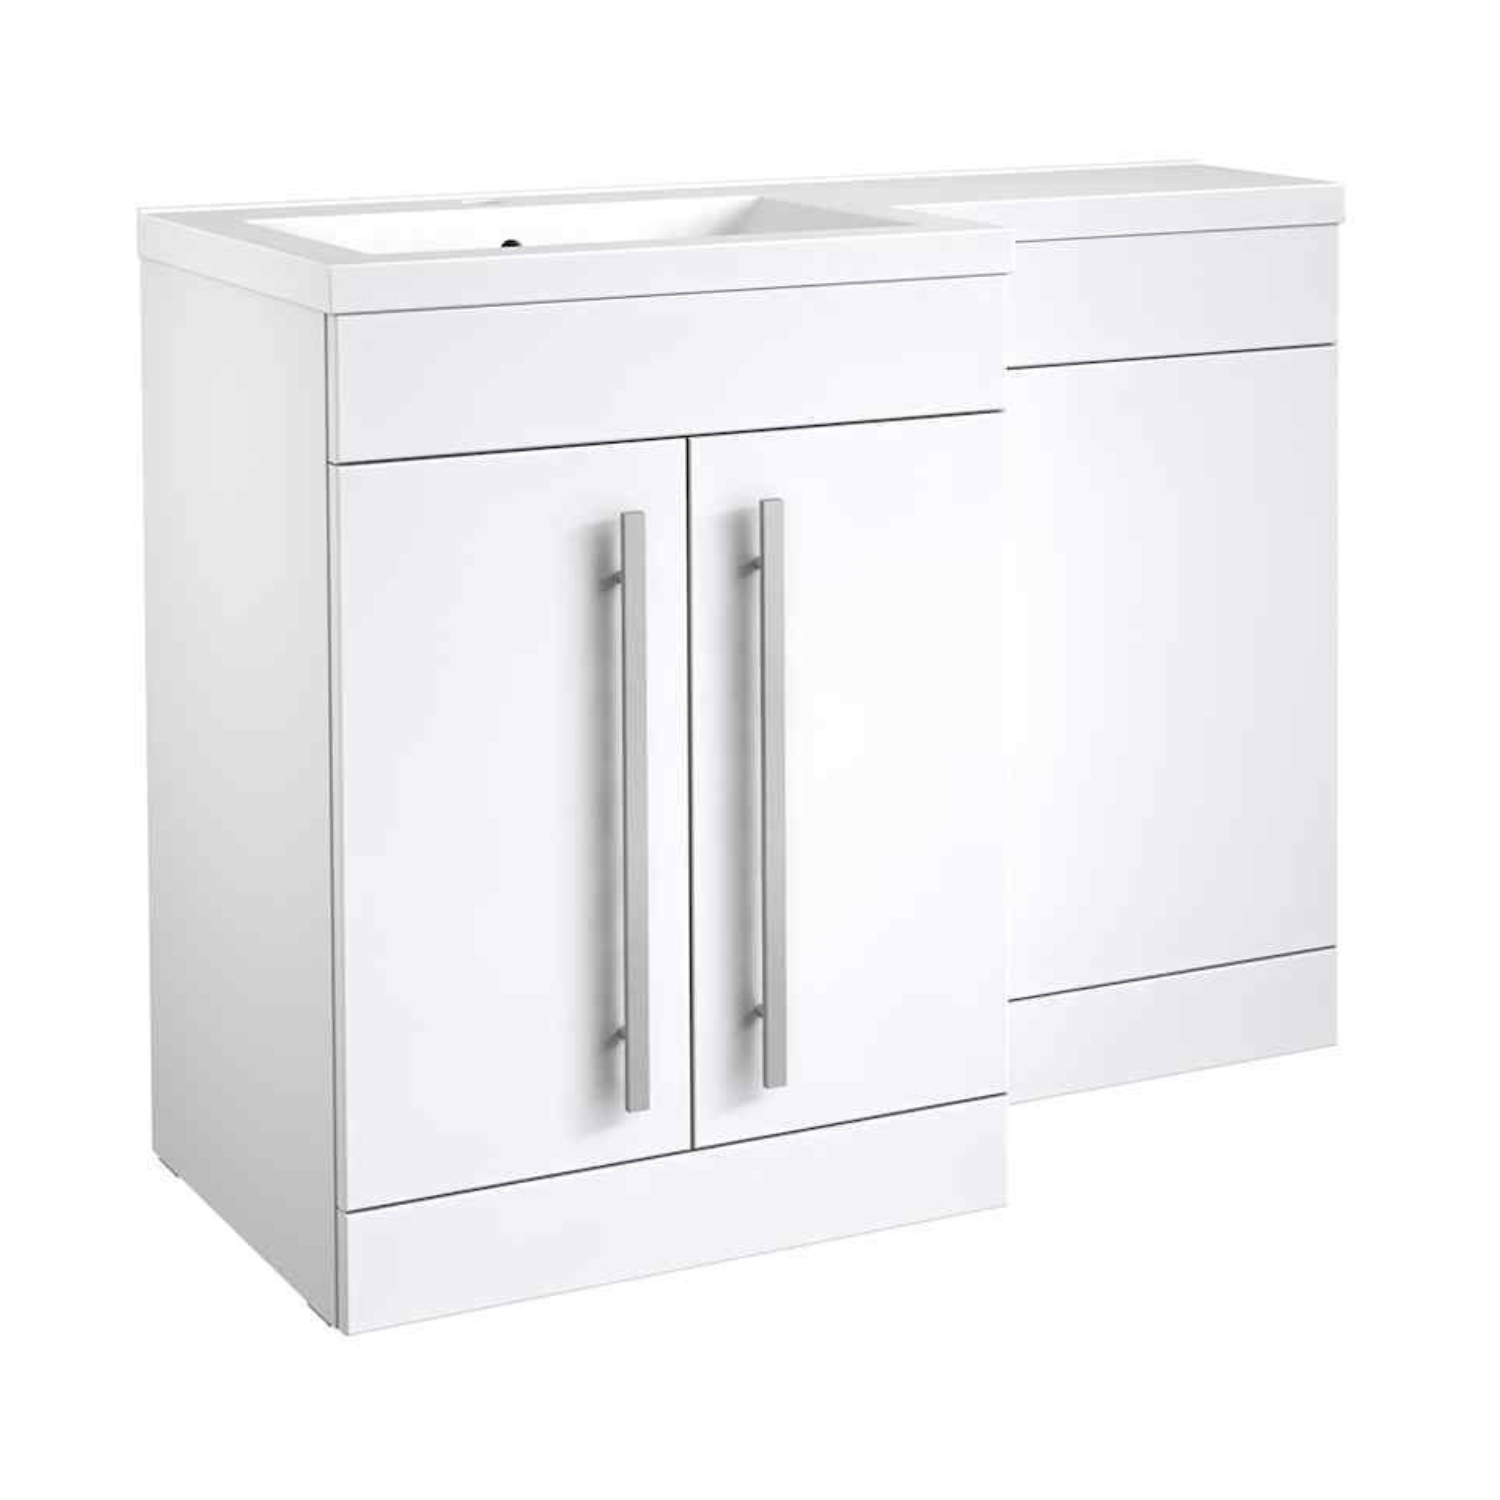 Matrix White Gloss Bathroom Suite: Vanity Unit with Basin & Toilet - Premium White Bathroom Furniture